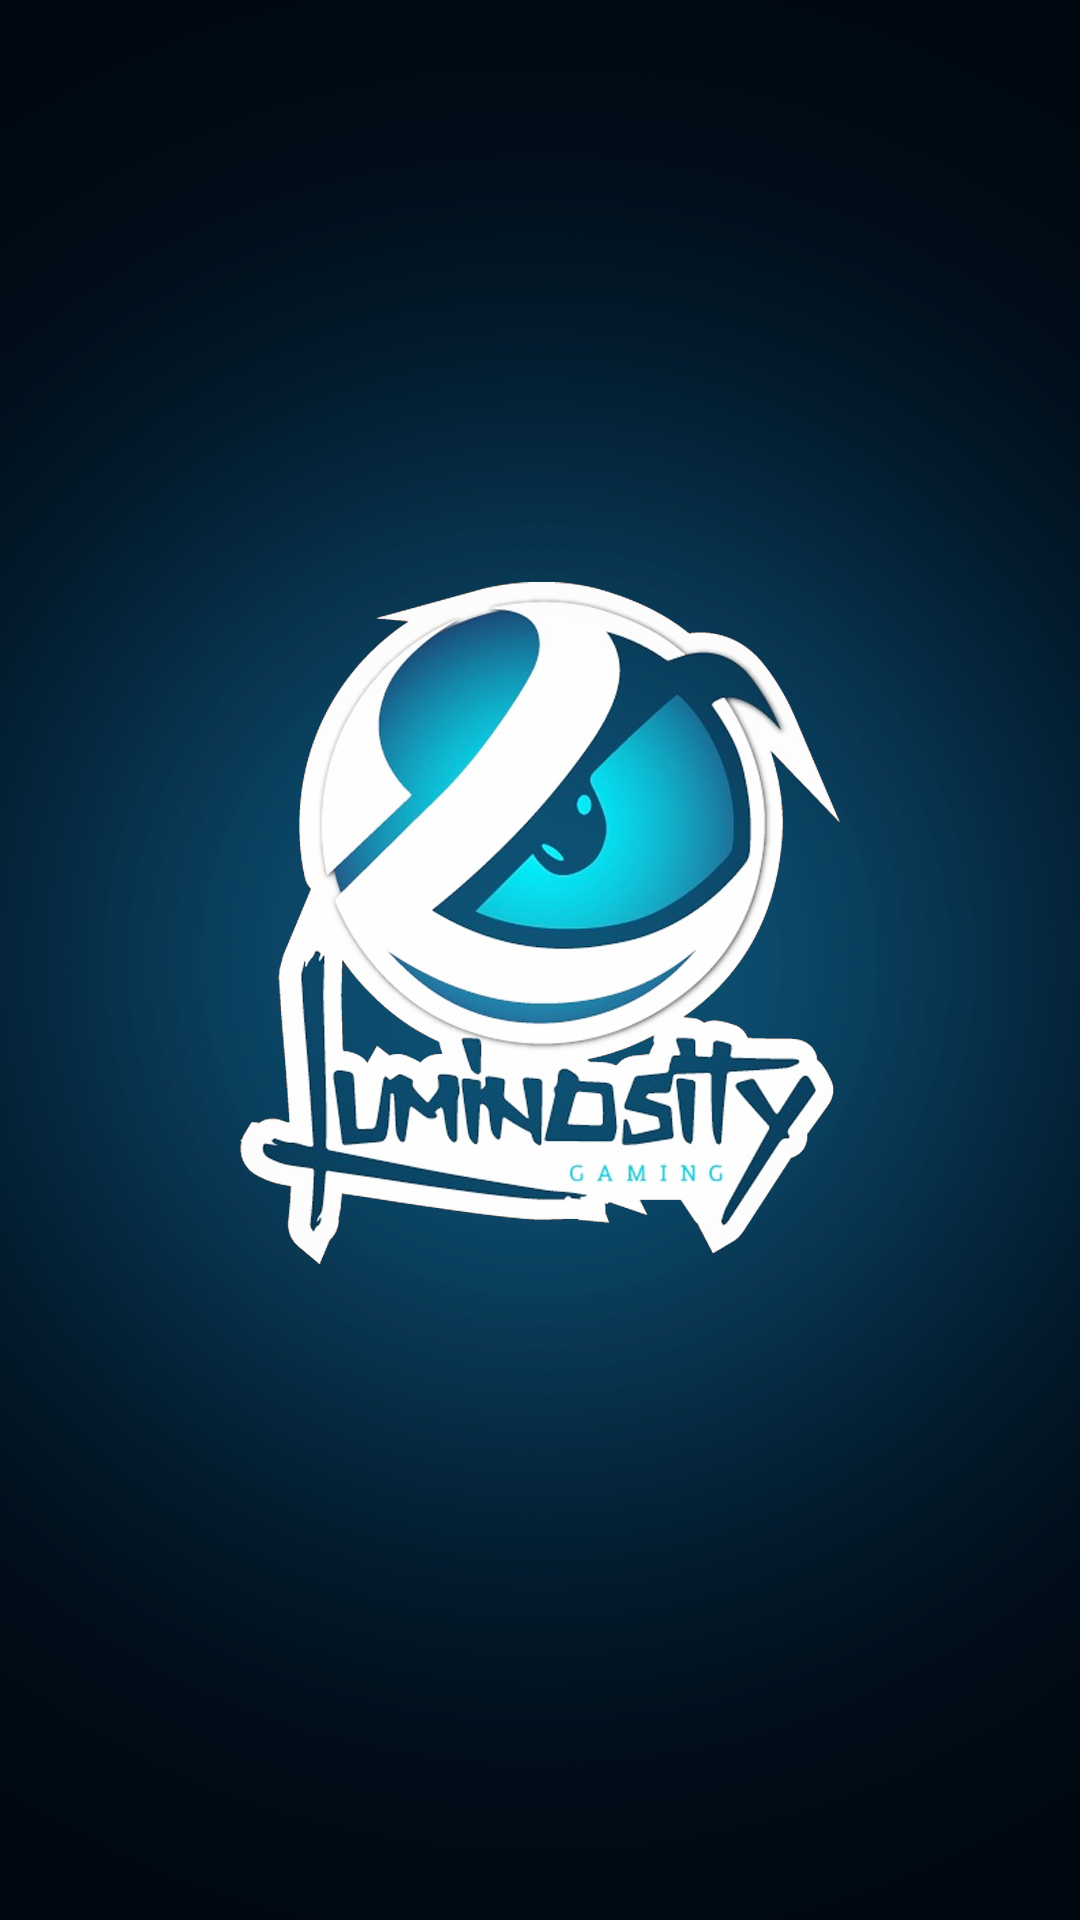 Luminosity Gaming created by .csgowallpaper.com